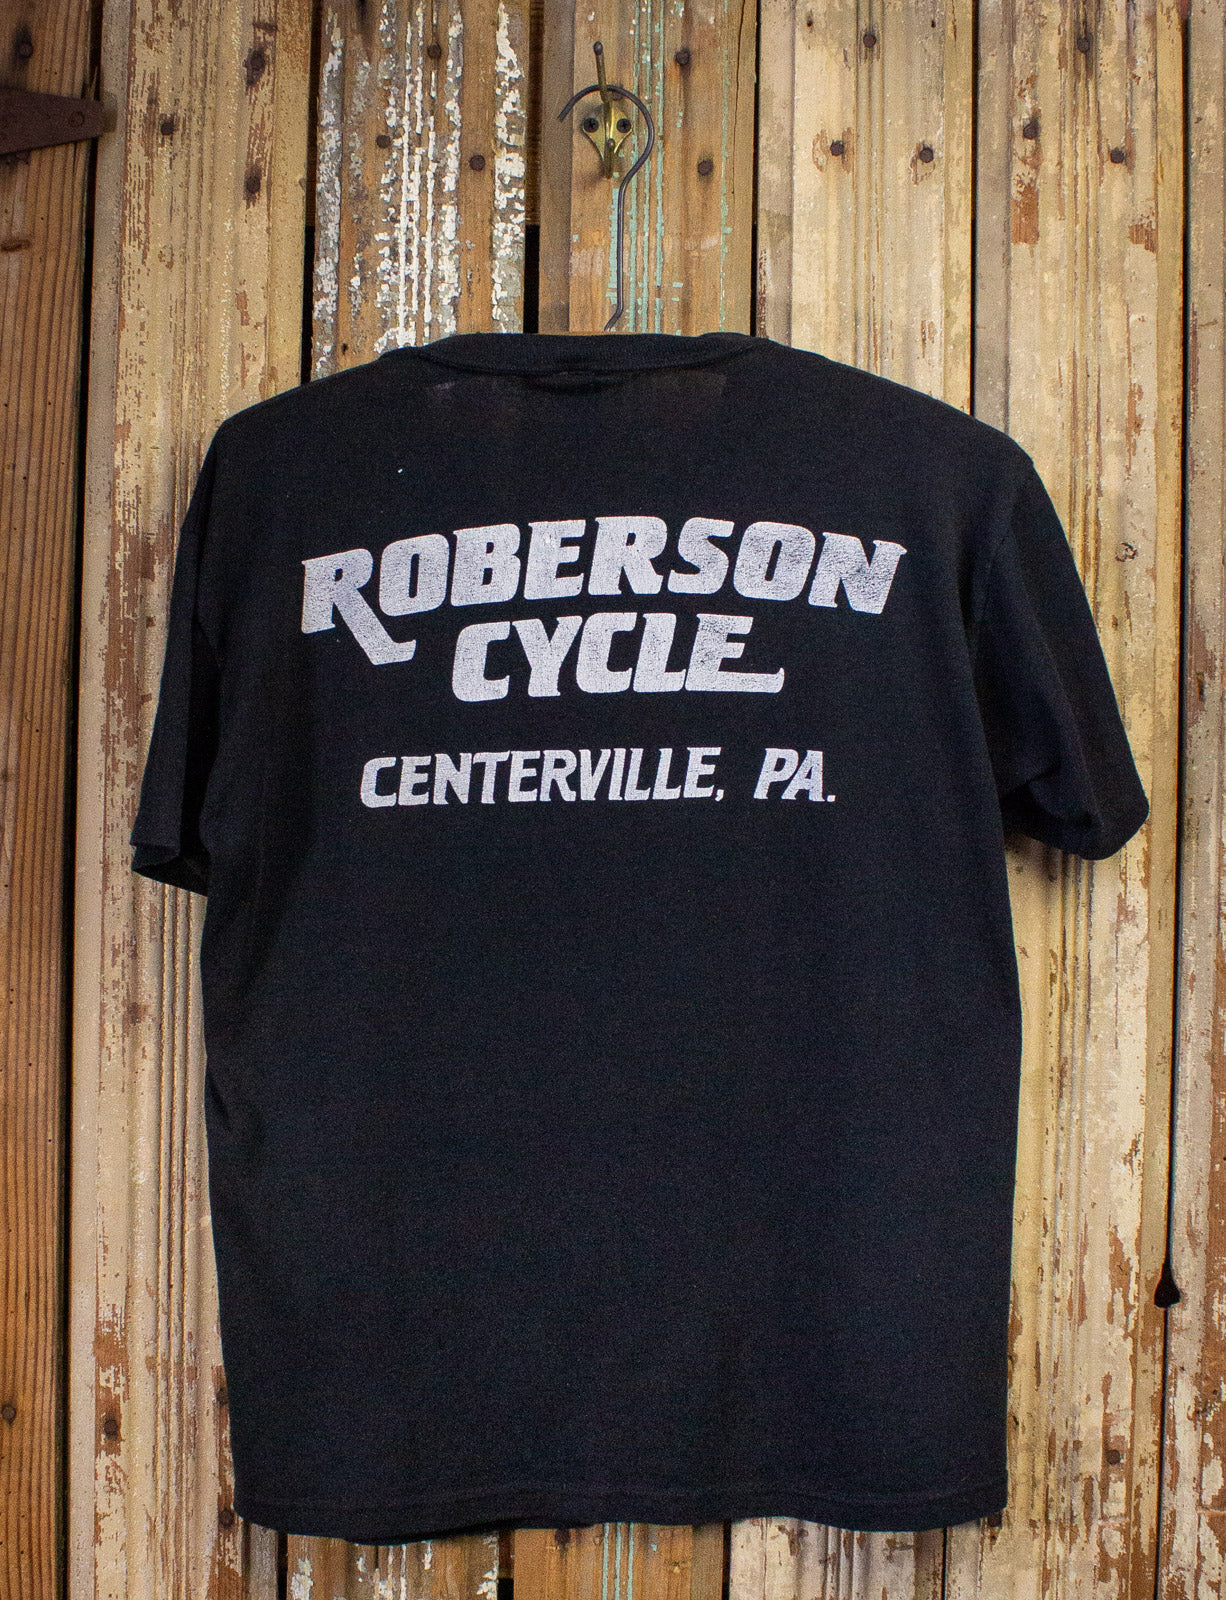 Vintage Harley Davidson Milwaukee Iron Graphic T Shirt 1986 Black Medium